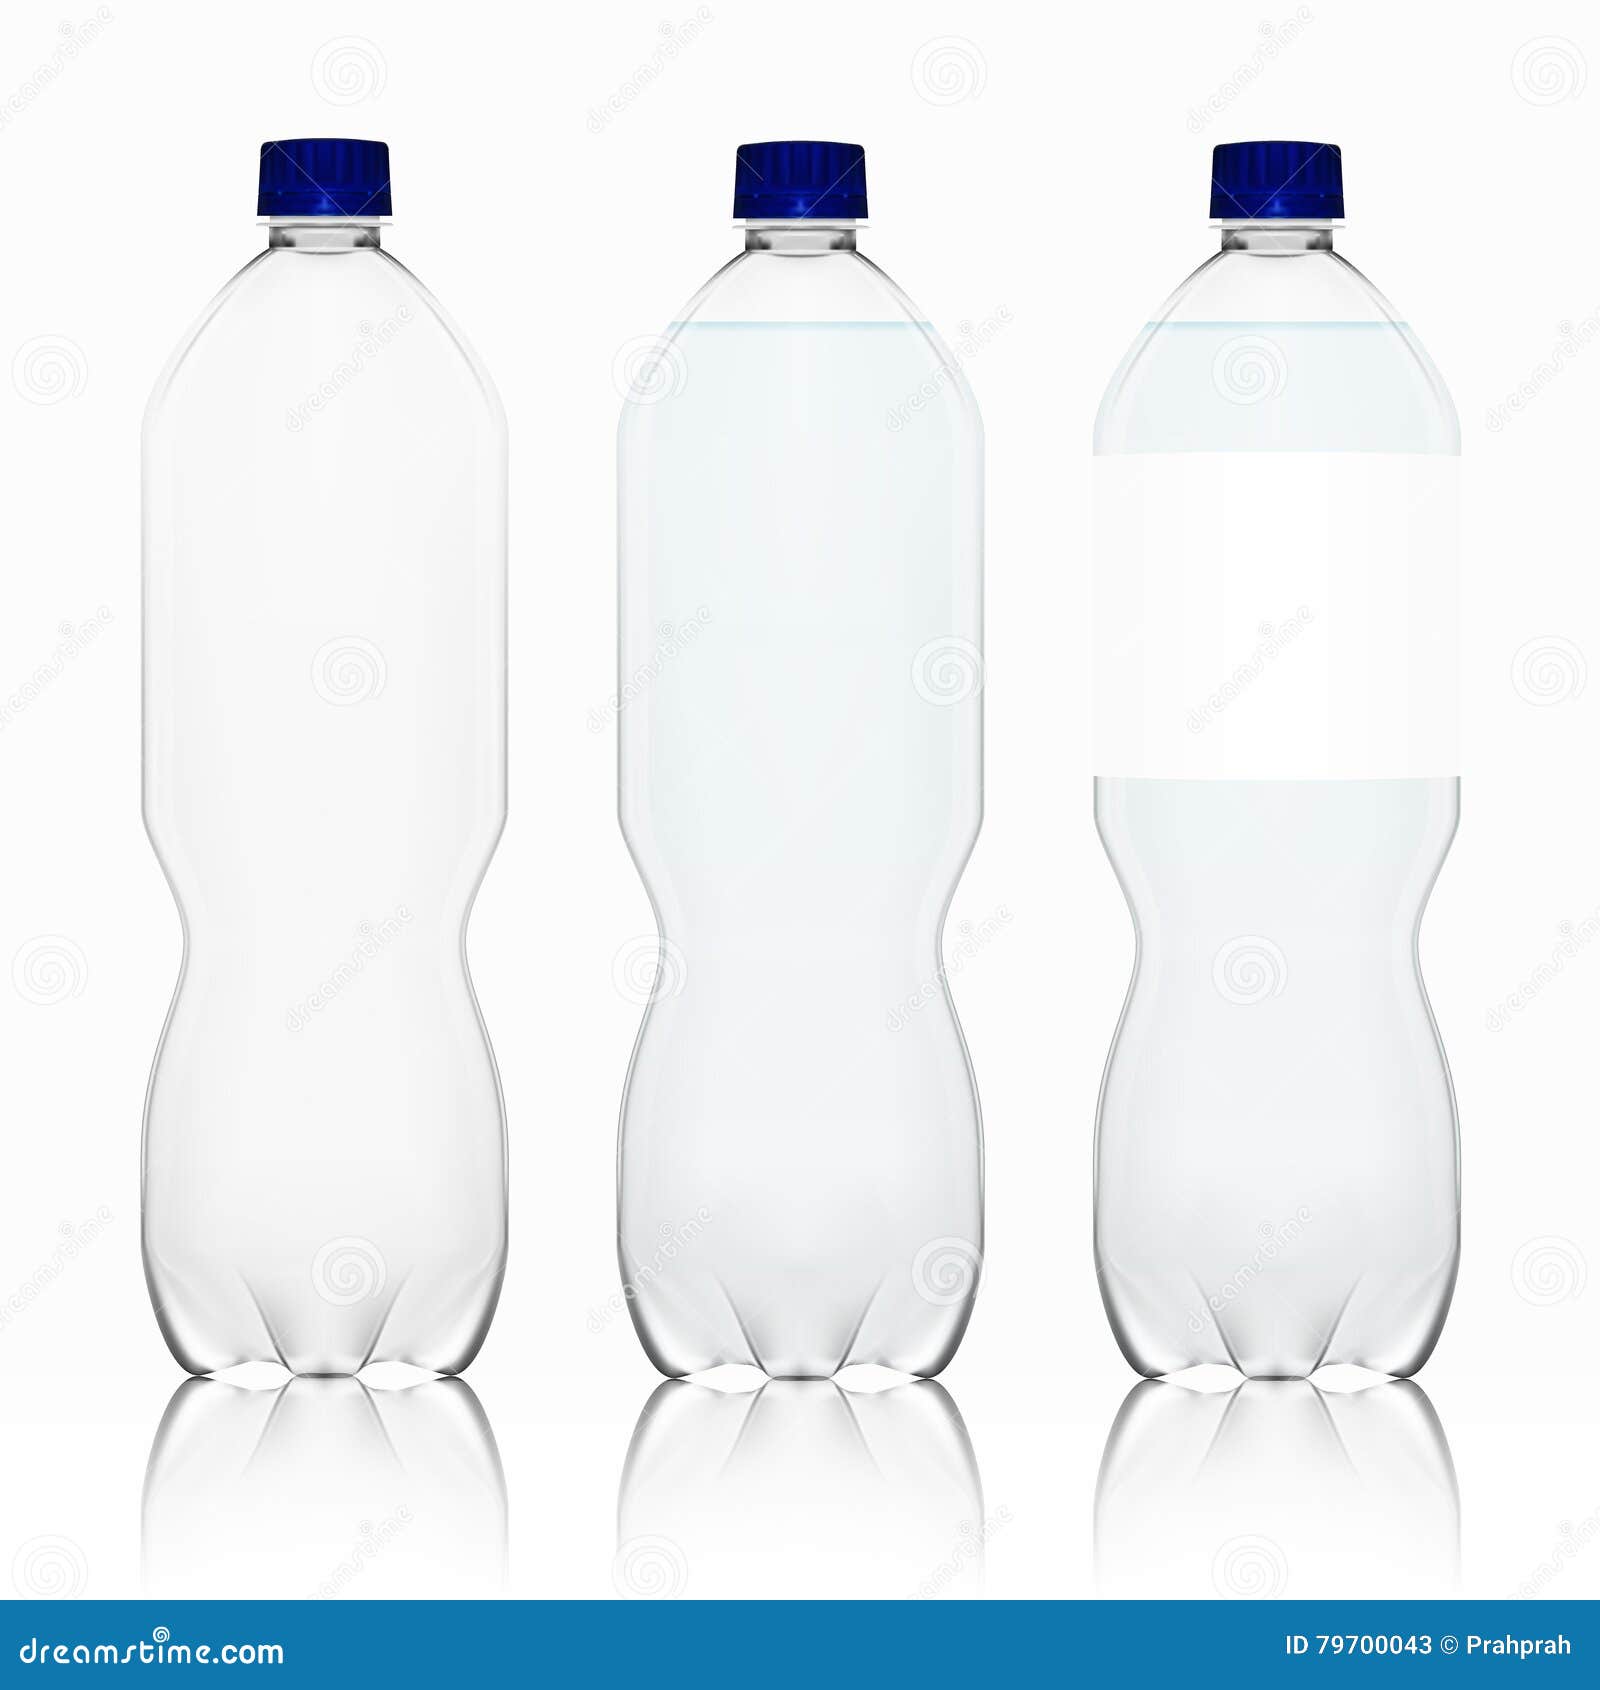 Realistic Transparent Empty Clean Plastic Bottle with Label Within Bubble Bottle Label Template